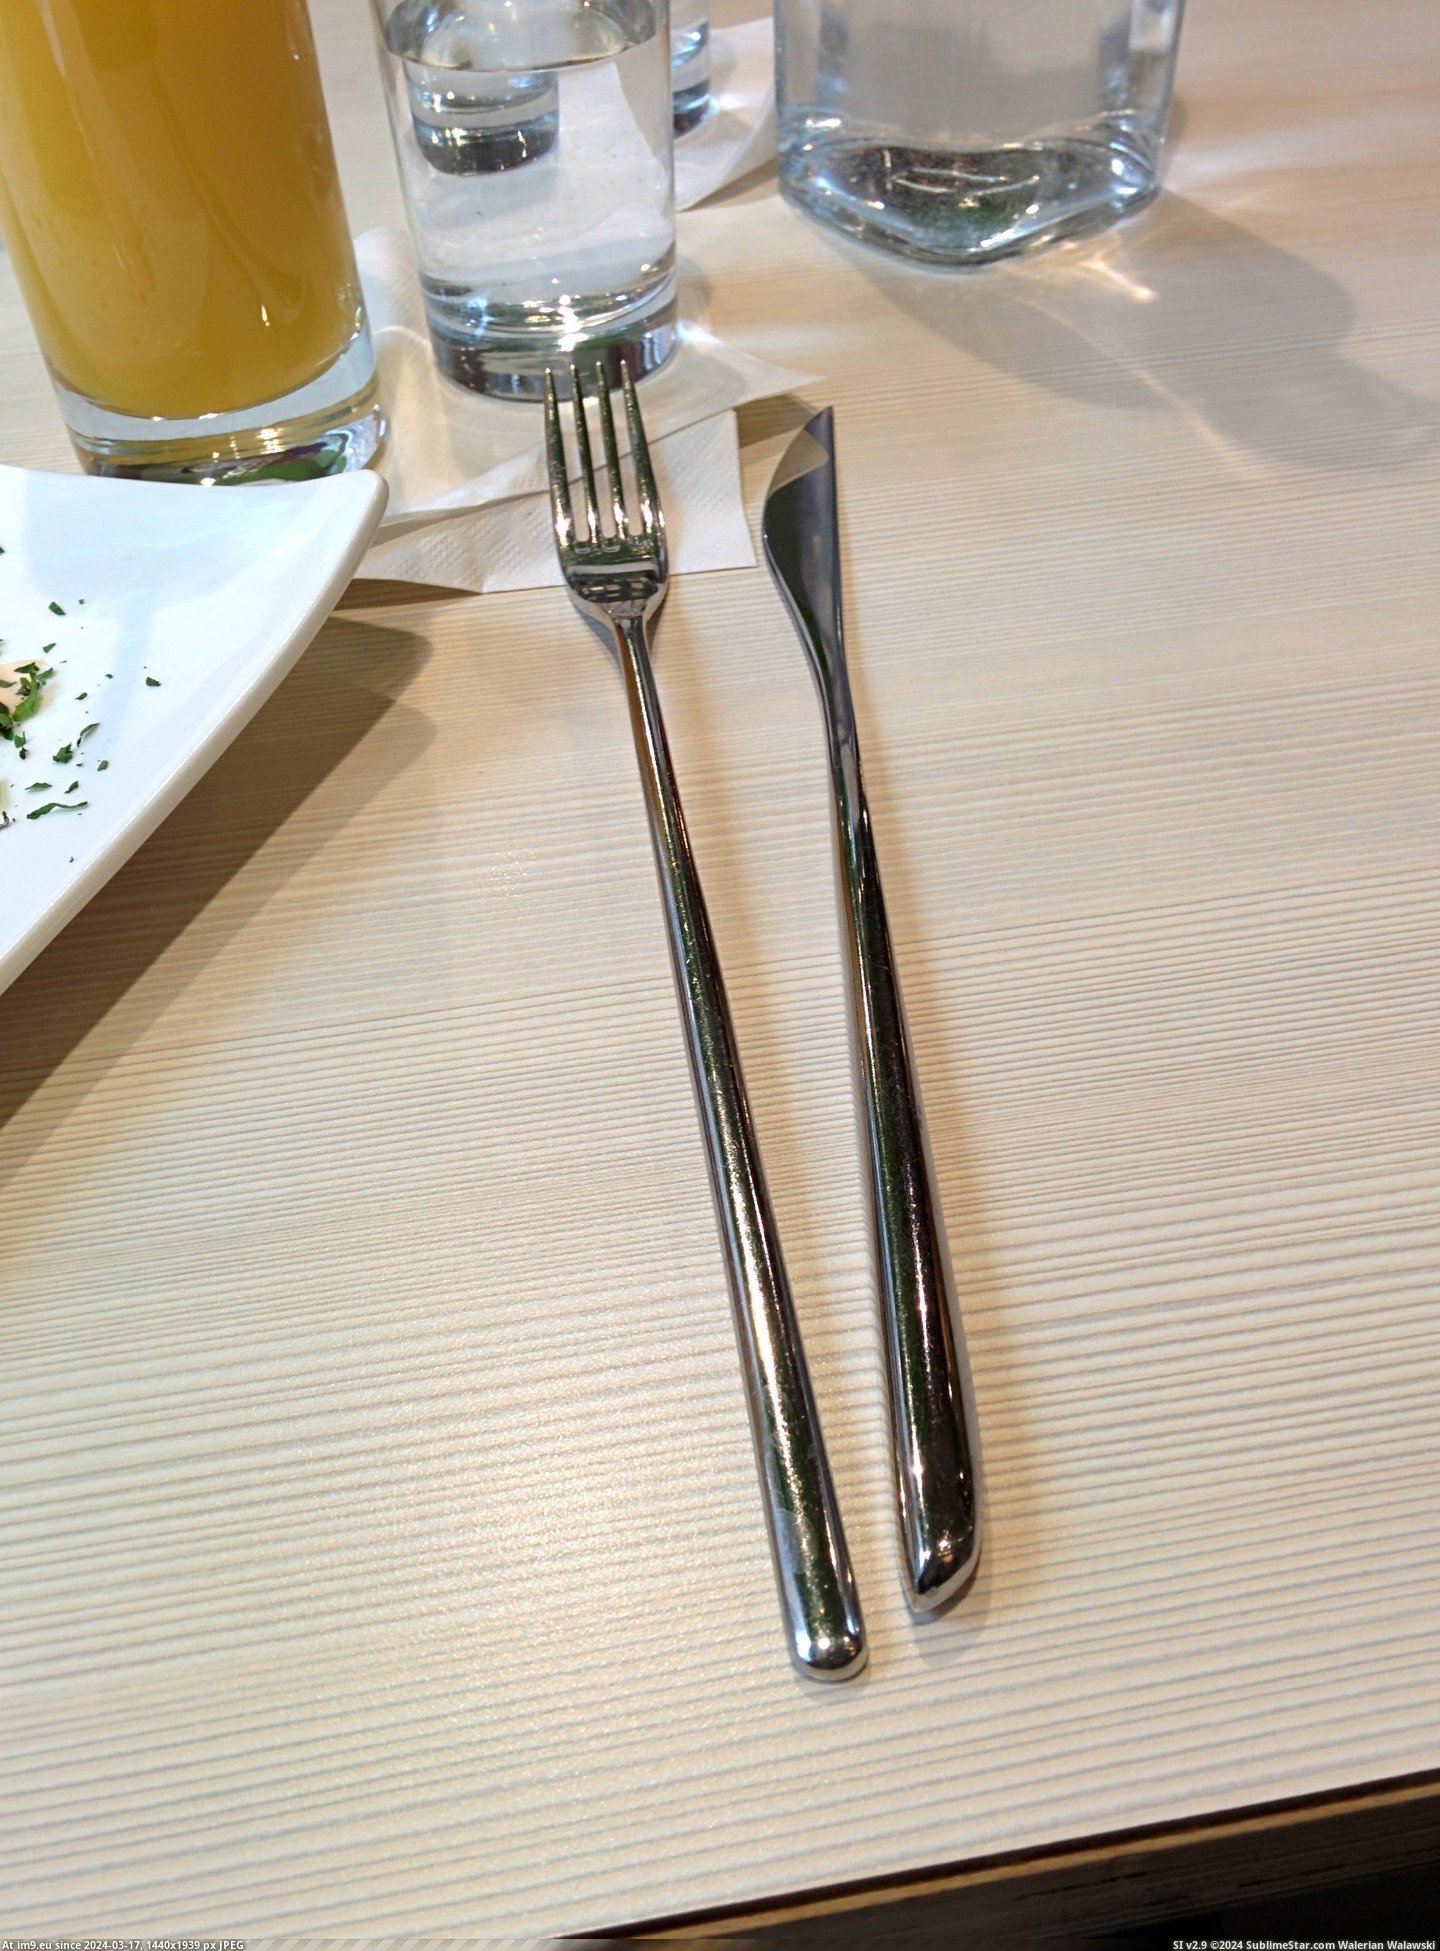 #Restaurant #Knife #Fork #Awkward [Mildlyinteresting] The fork and knife at this restaurant are very awkward Pic. (Image of album My r/MILDLYINTERESTING favs))